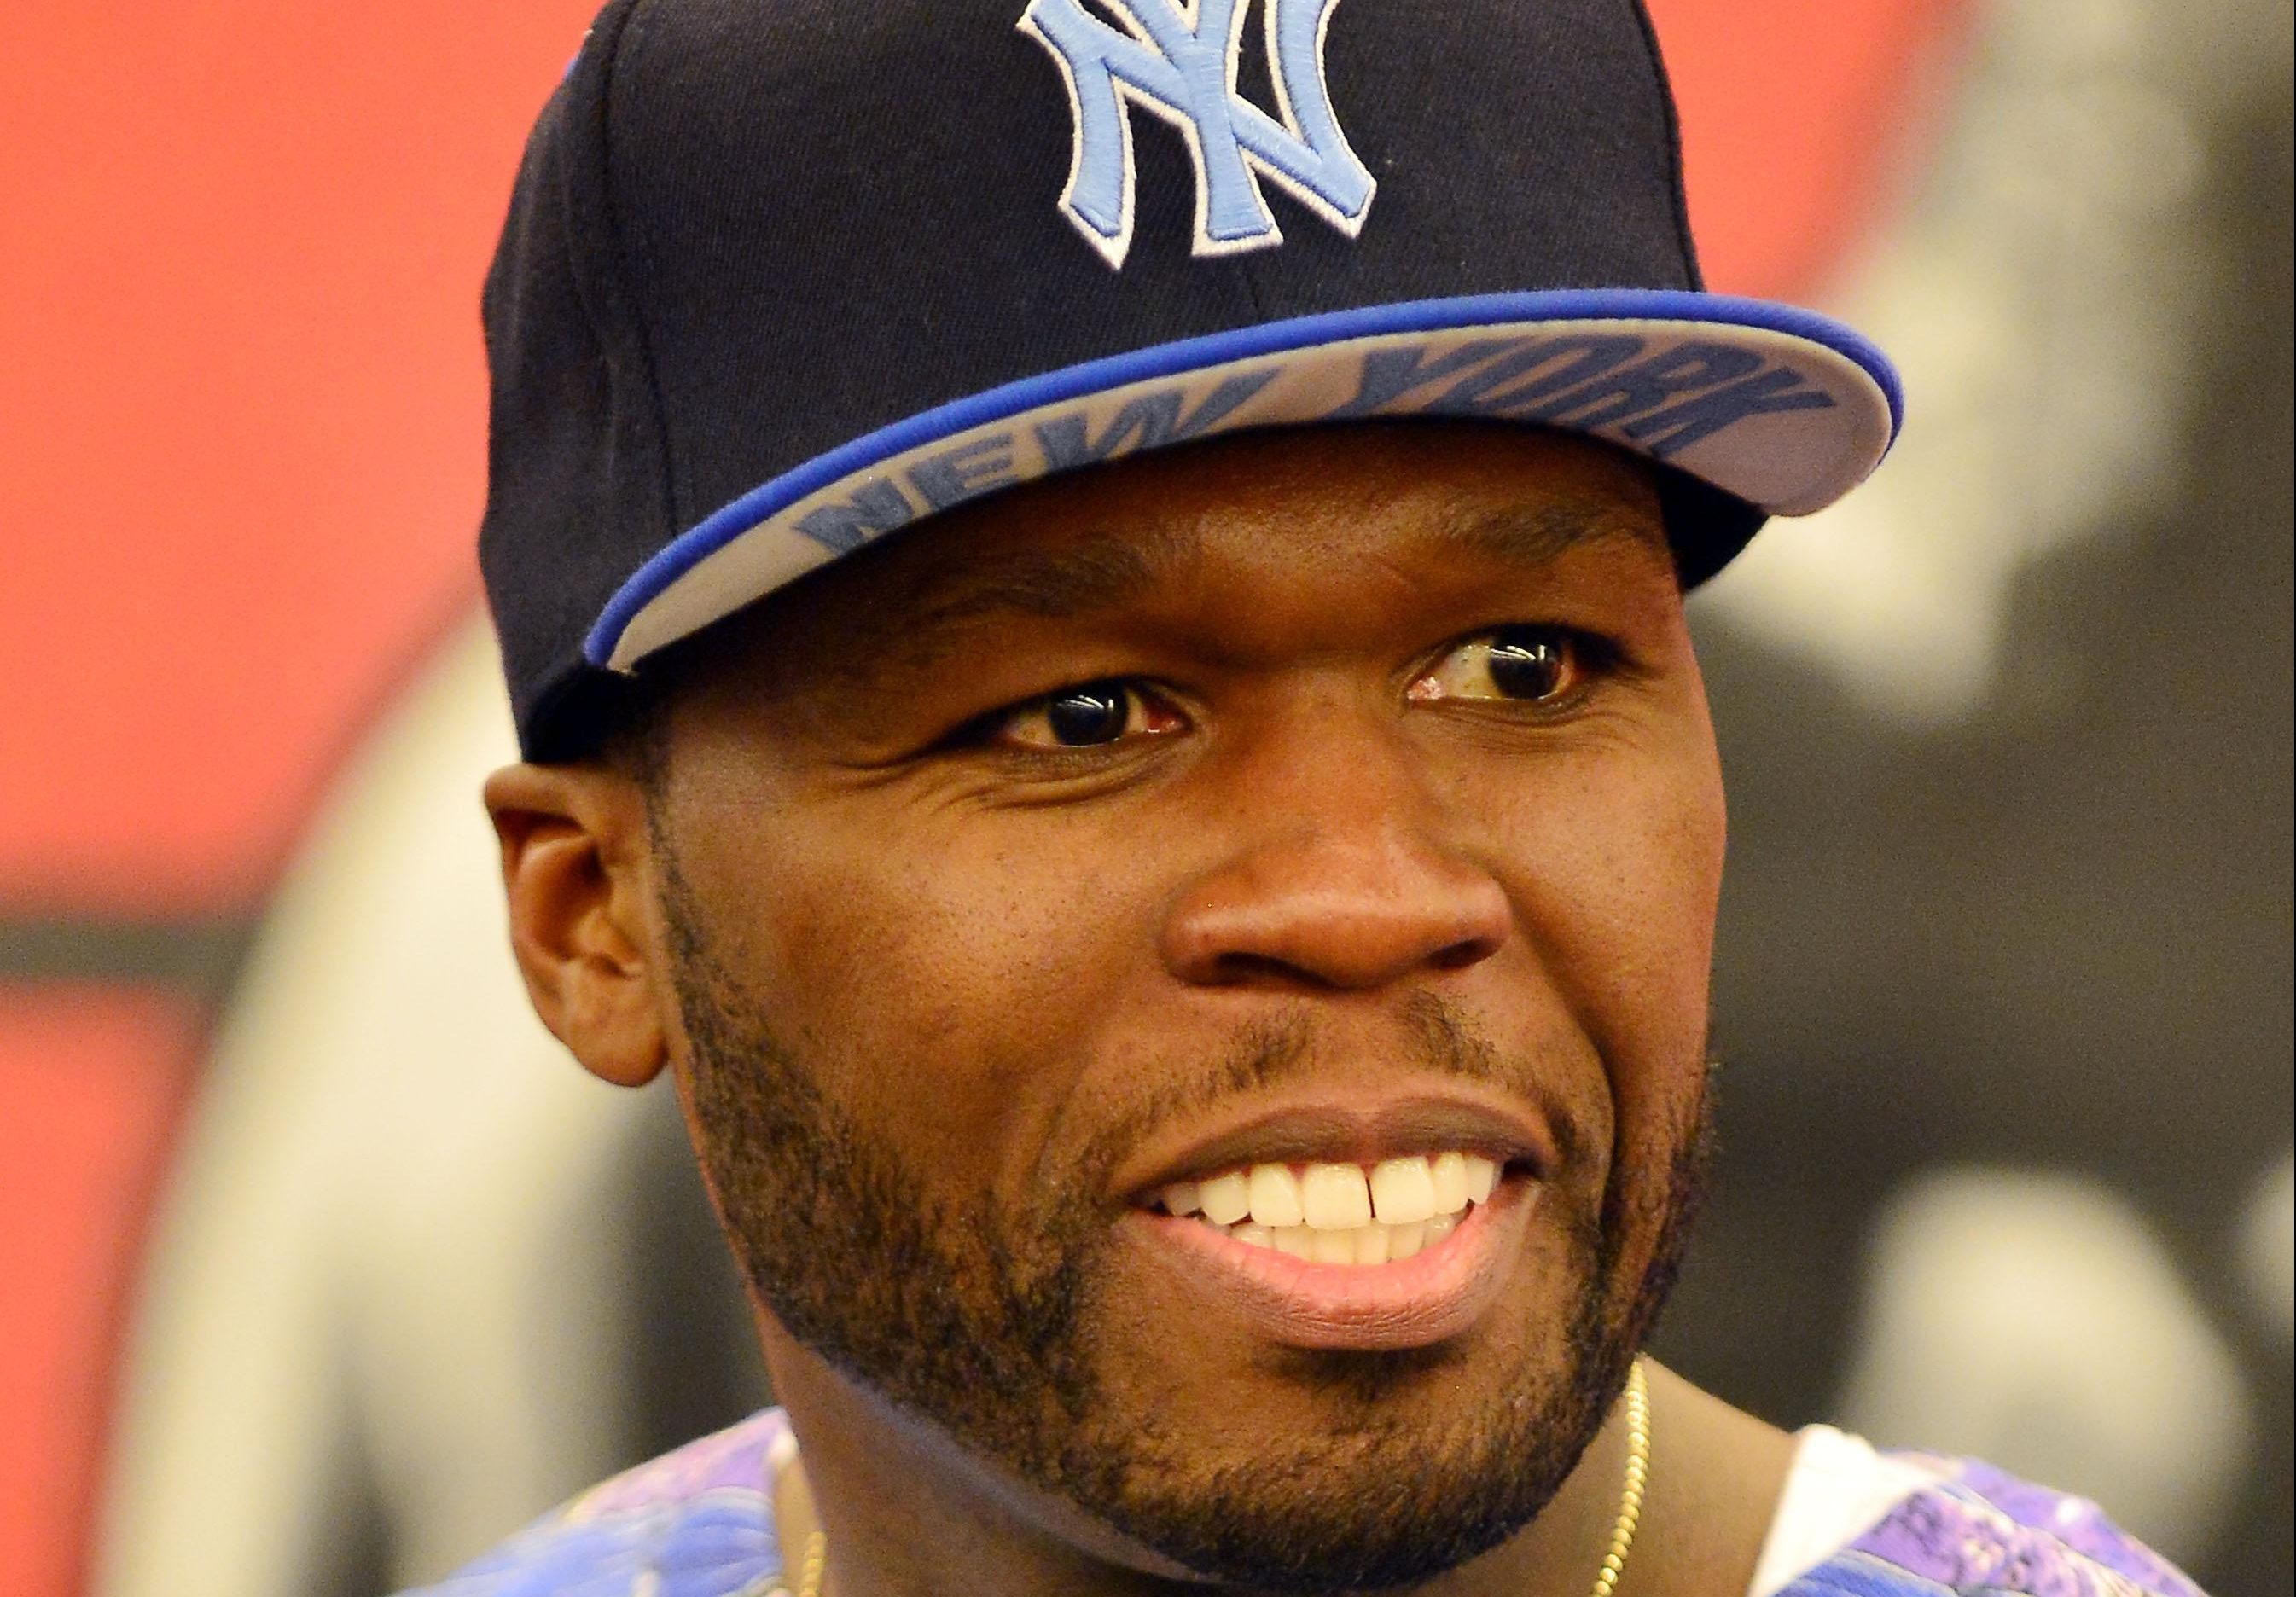 50 Cent Hosts Yuriorkis Gamboa Open Media Workout